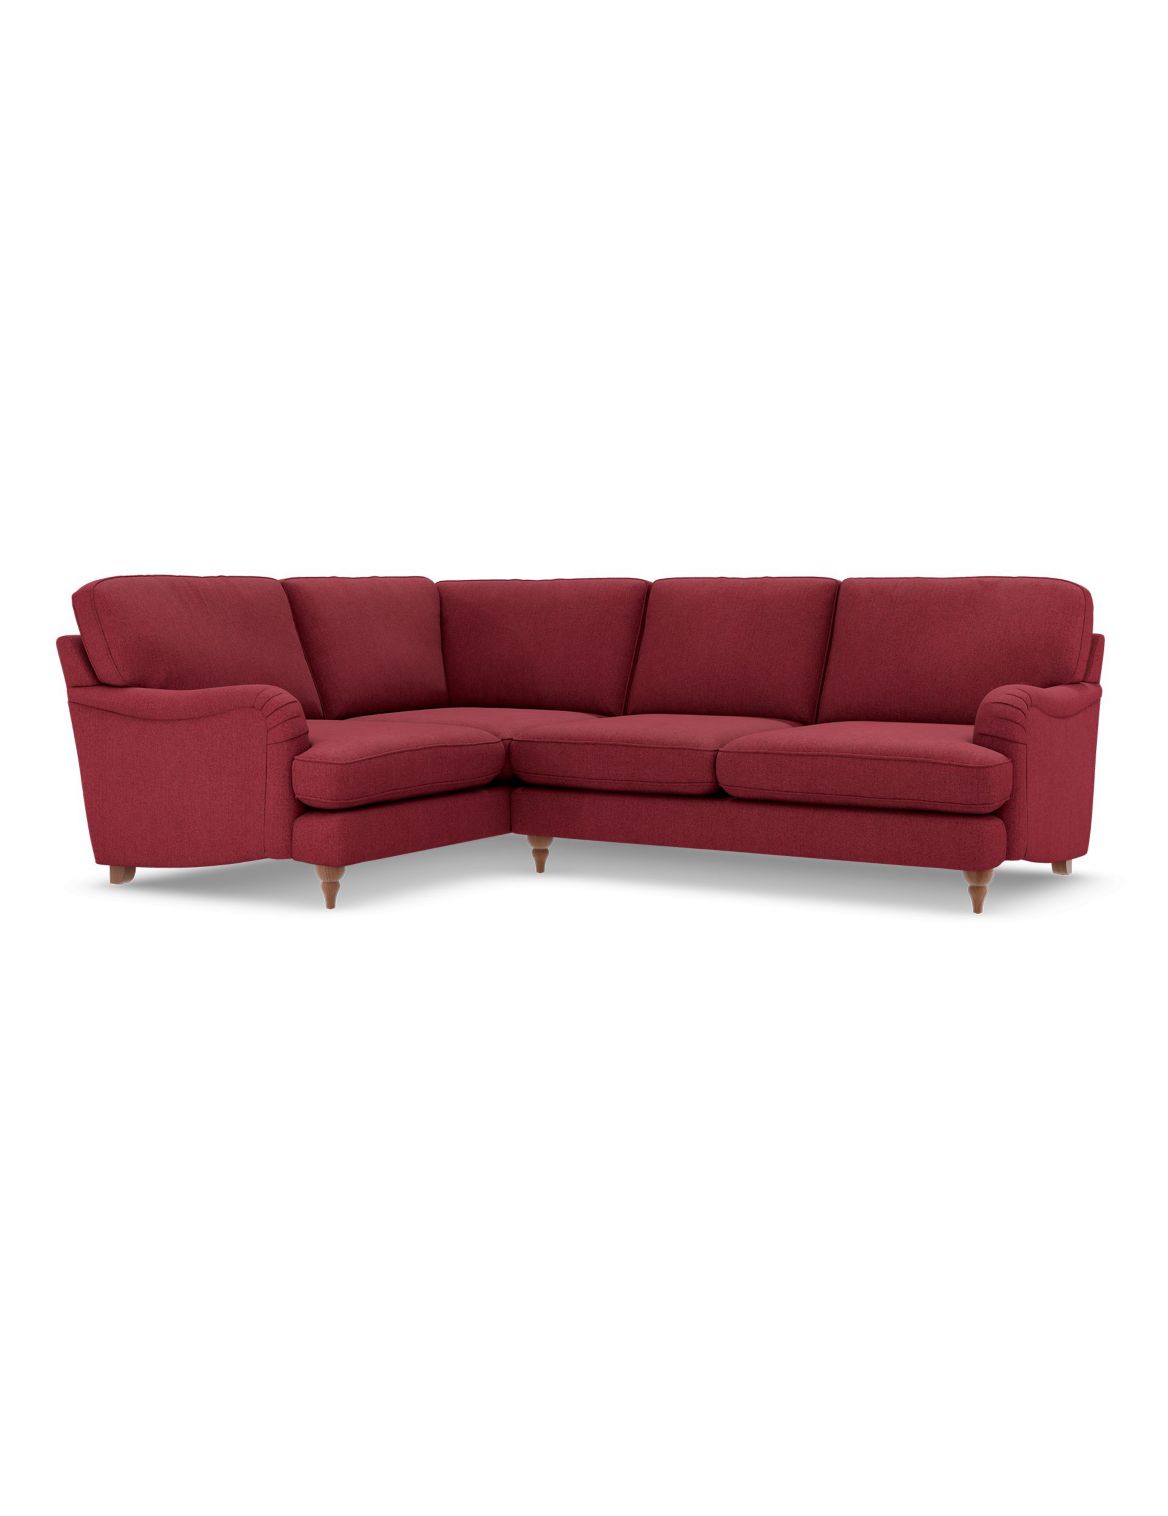 Rochester Small Corner Sofa (Left-Hand) red